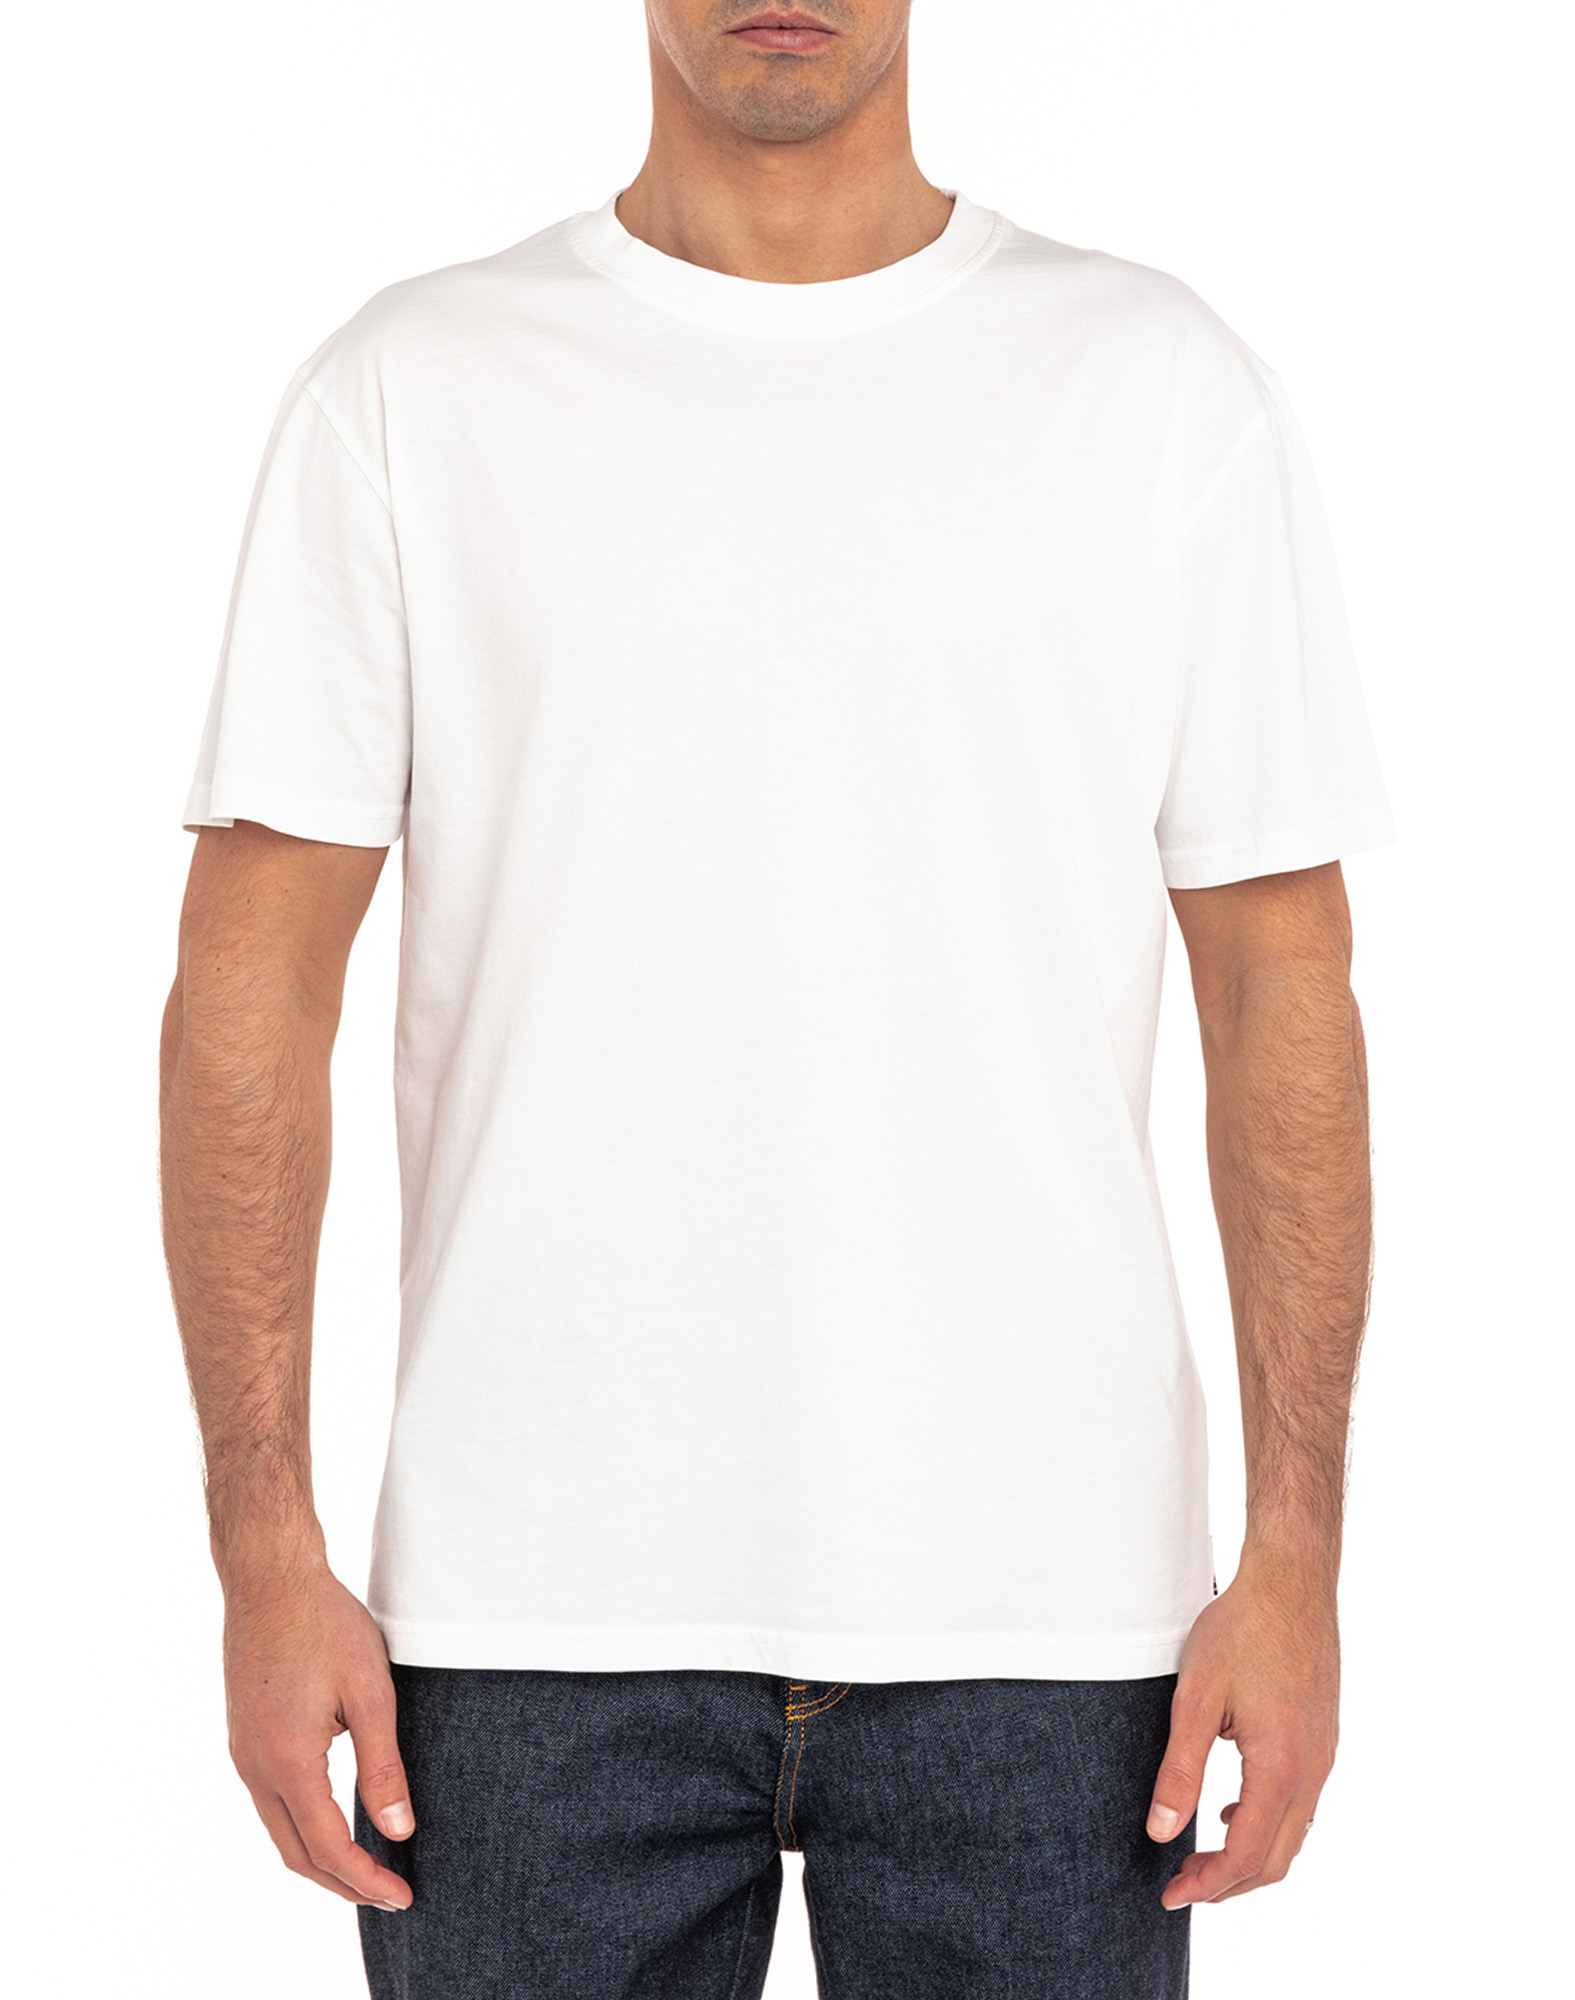 T-shirt blanc homme grande taille - DistriCenter